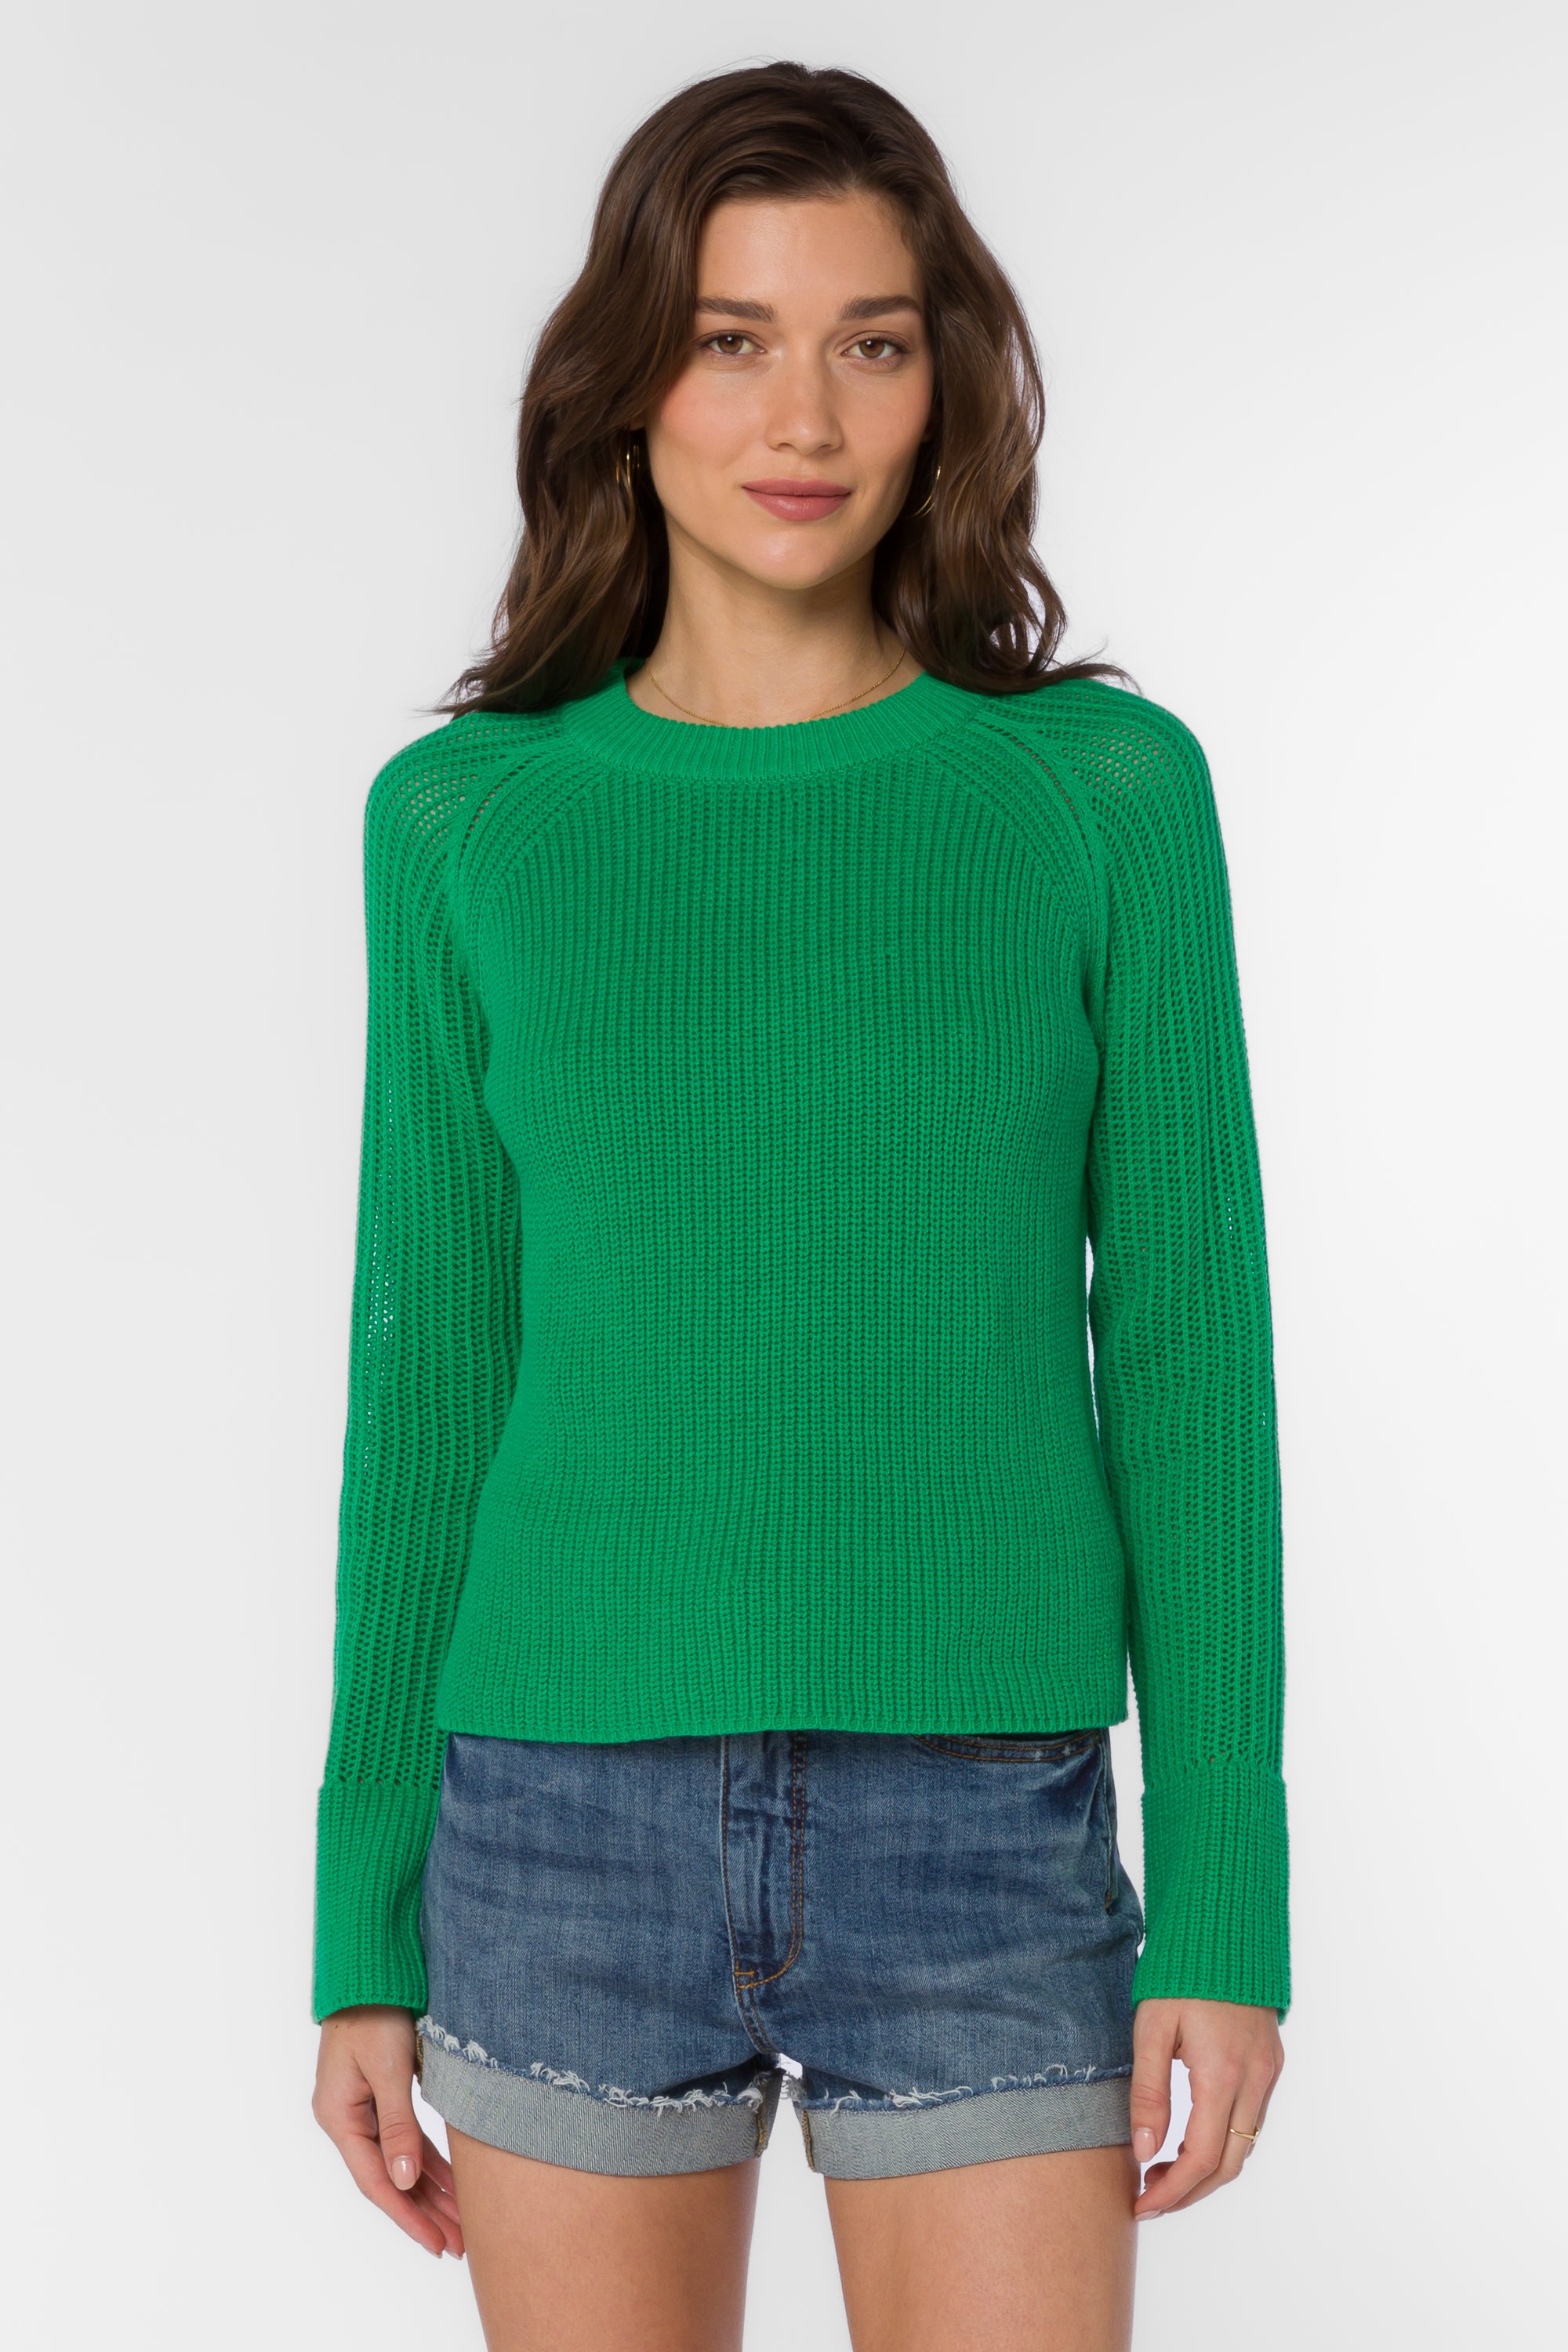 Craig Bright Green Sweater - Sweaters - Velvet Heart Clothing